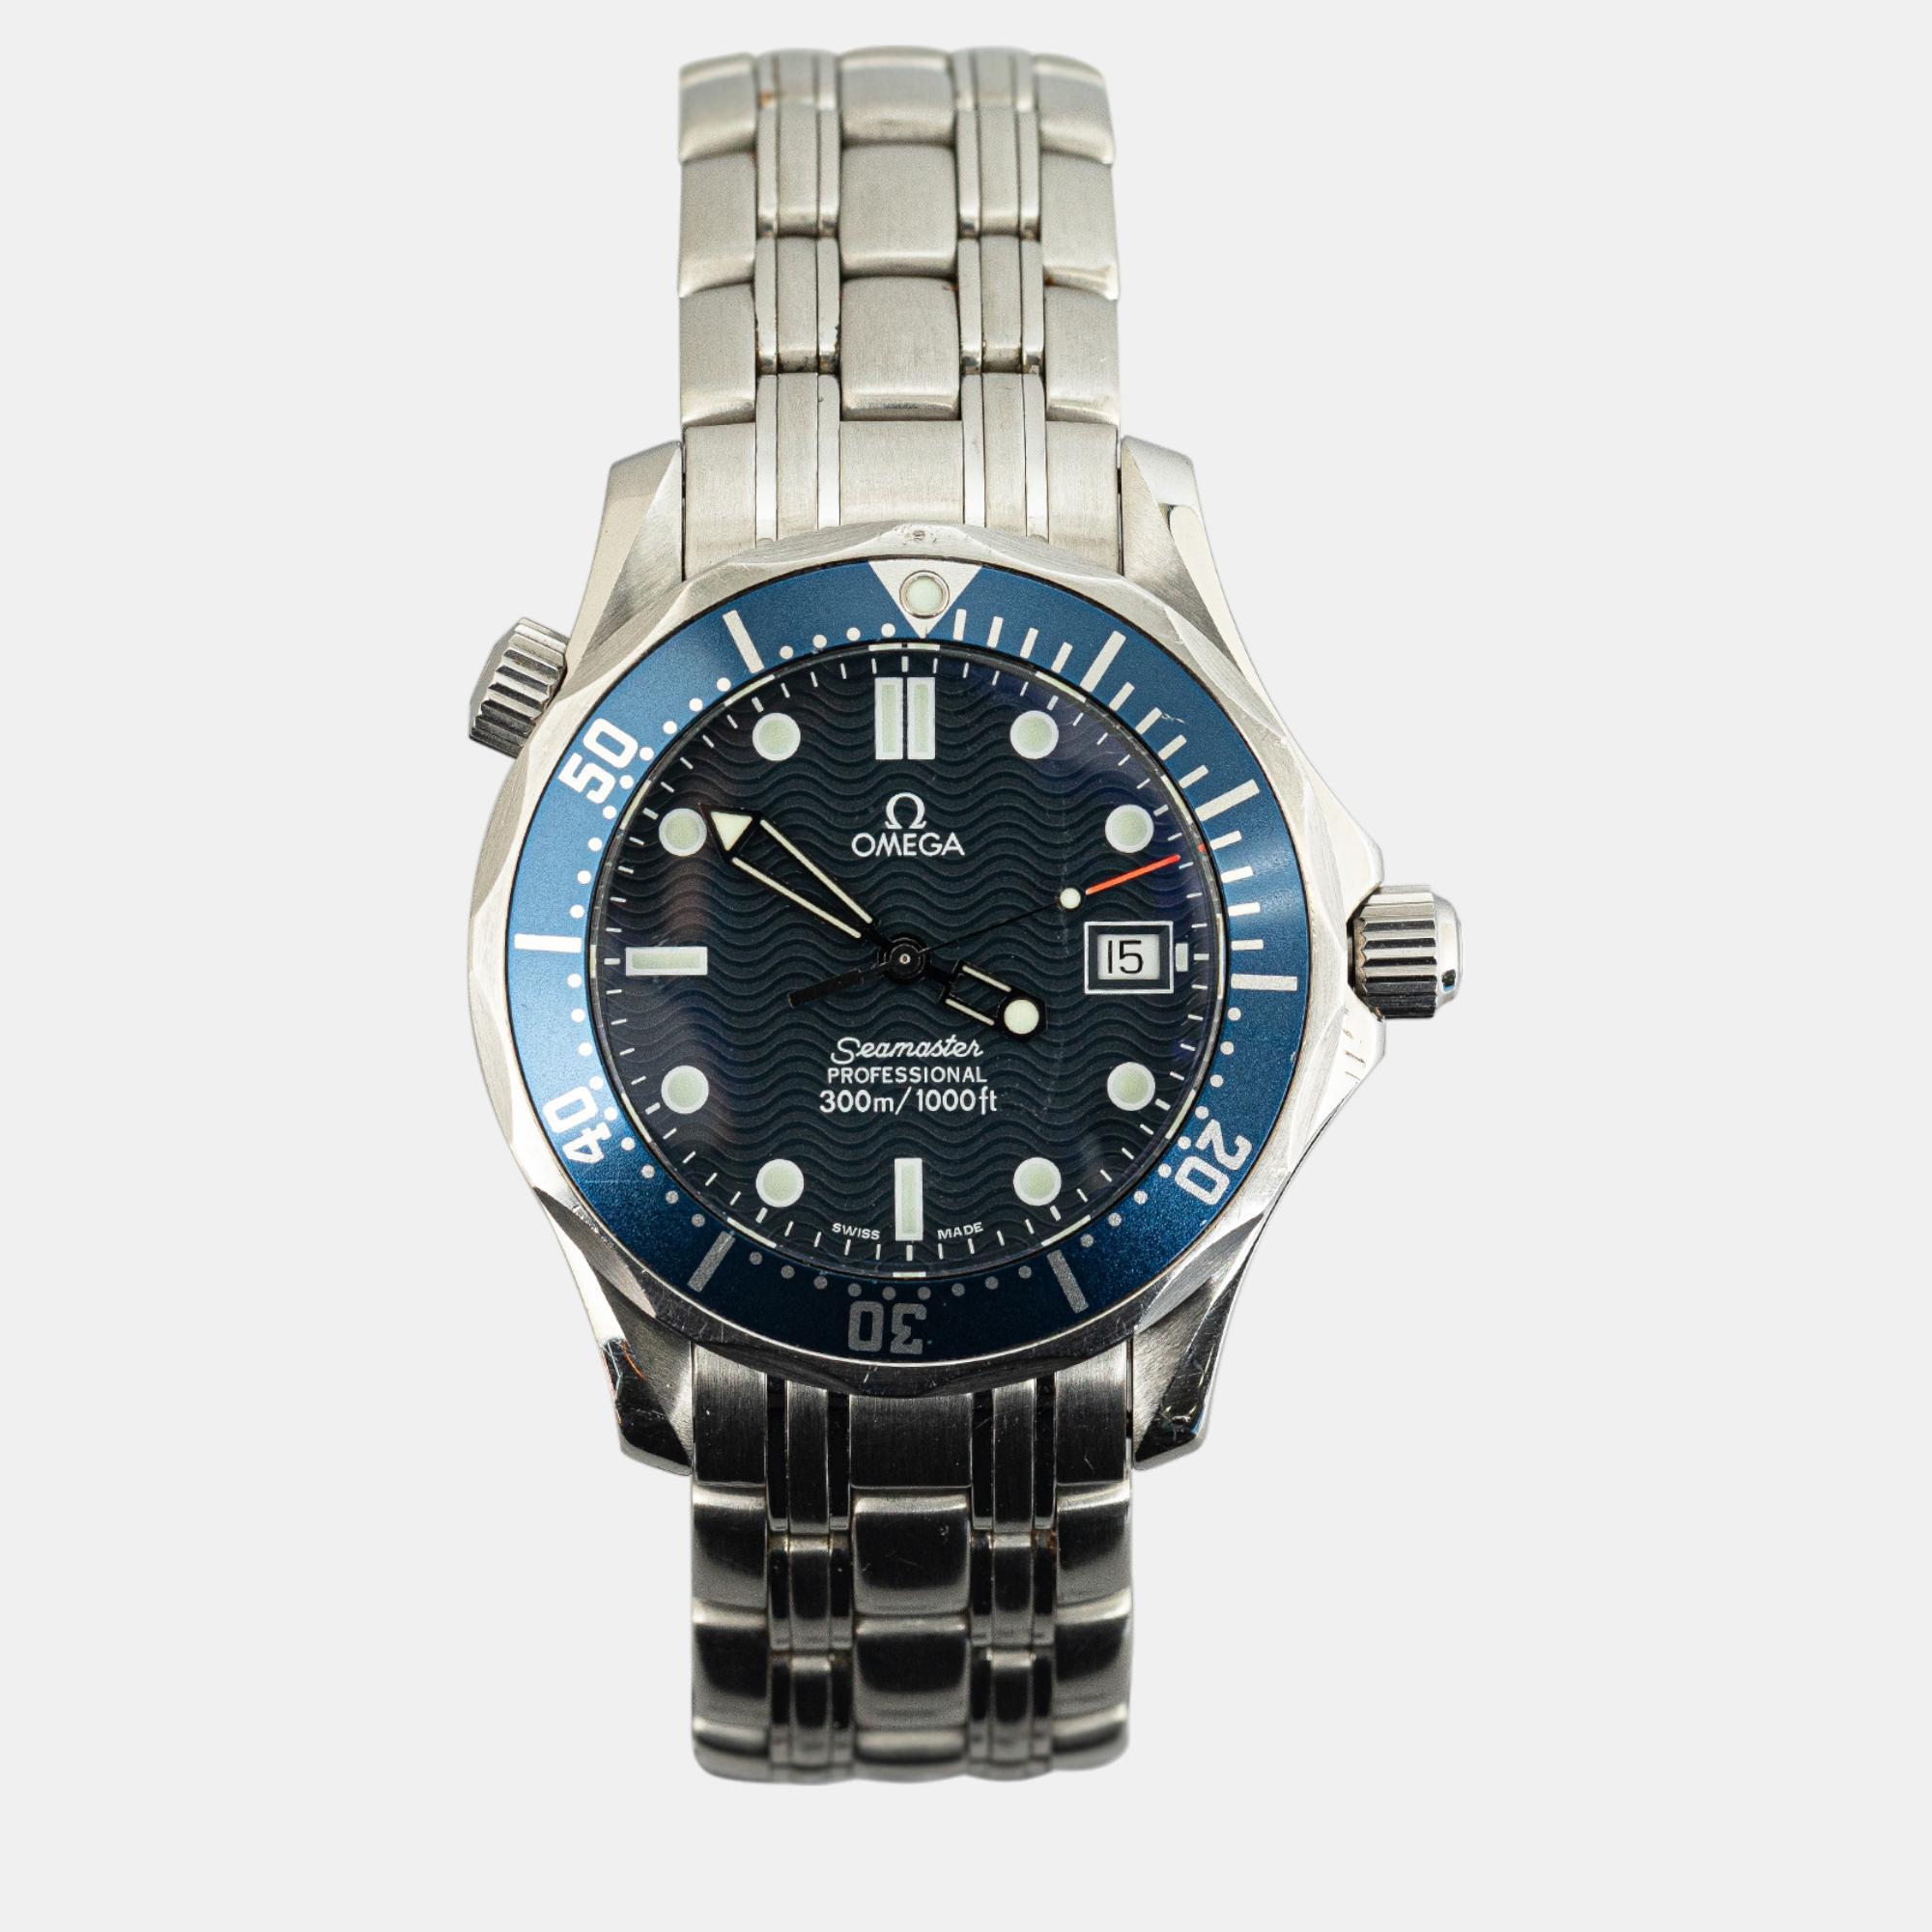 Omega quartz stainless steel seamaster professional watch